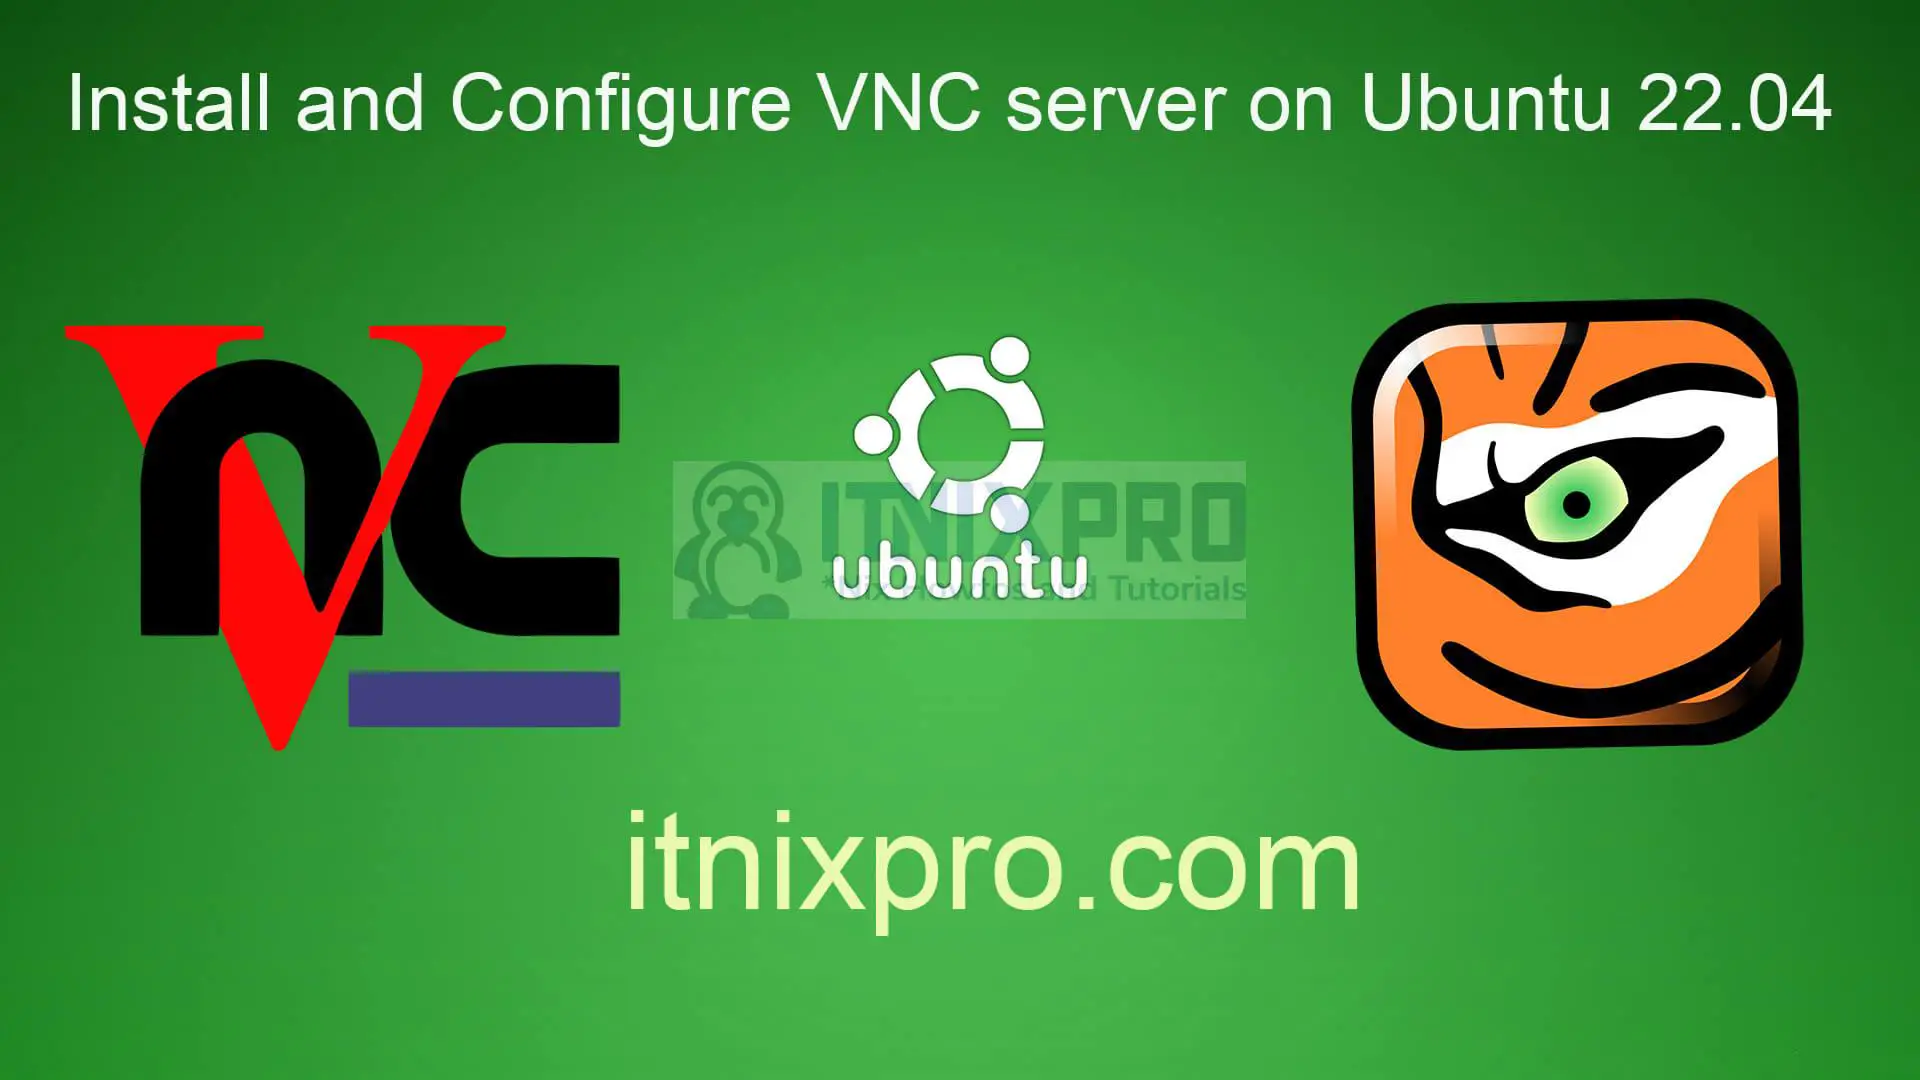 Install and Configure VNC server on Ubuntu 22.04